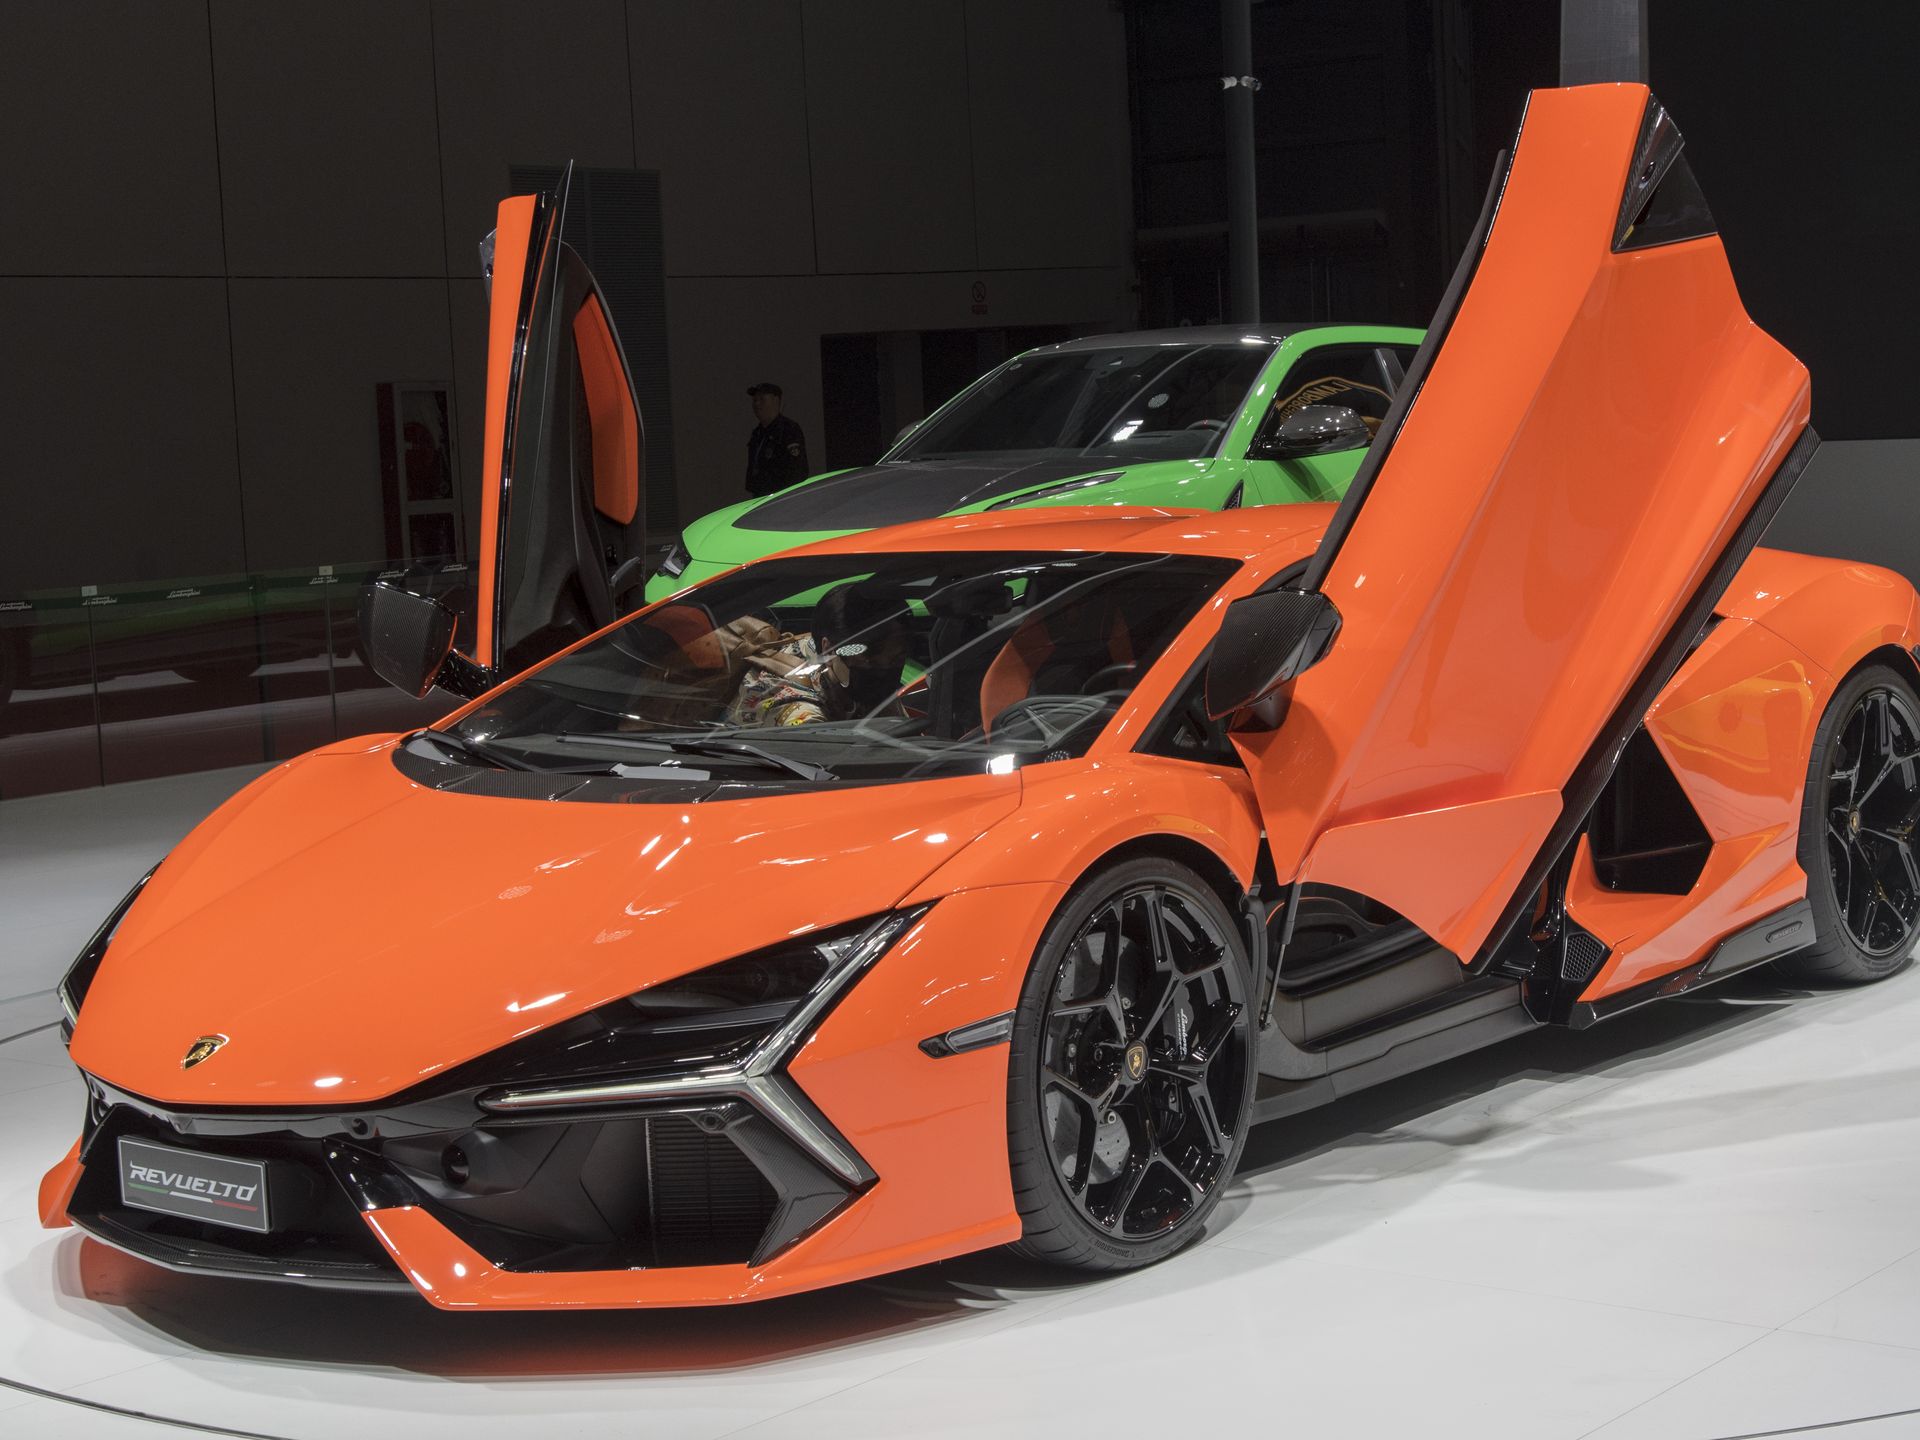 Lamborghini rolls out Electric, V12 Hybrid